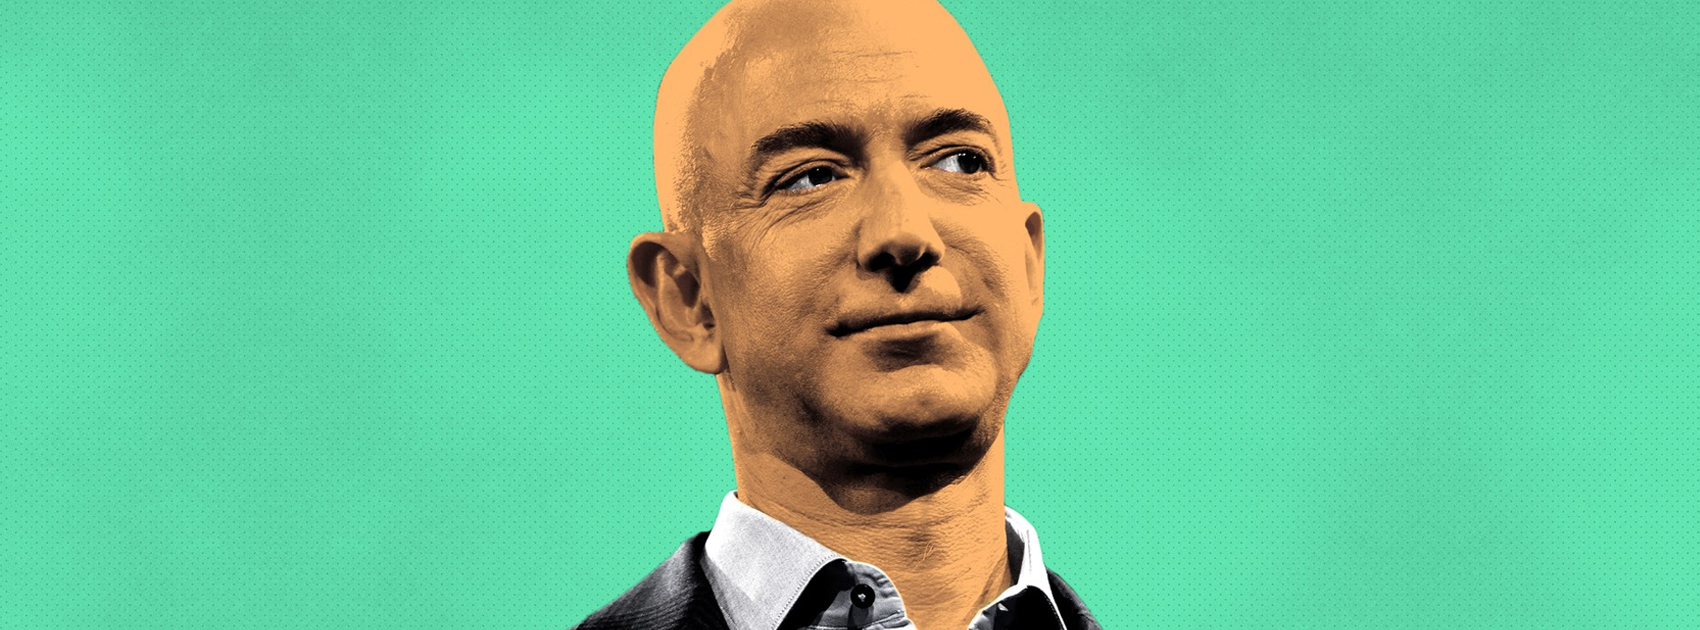 Jeff Bezos Loses World Richest Man Title,Startup Stories,World Richest Man in World,World Richest Man,Amazon founder and CEO Jeff Bezos,world's richest man Title Amazon founder Loses,Amazon Founder Jeff Bezos,Jeff Bezos Latest News 2019